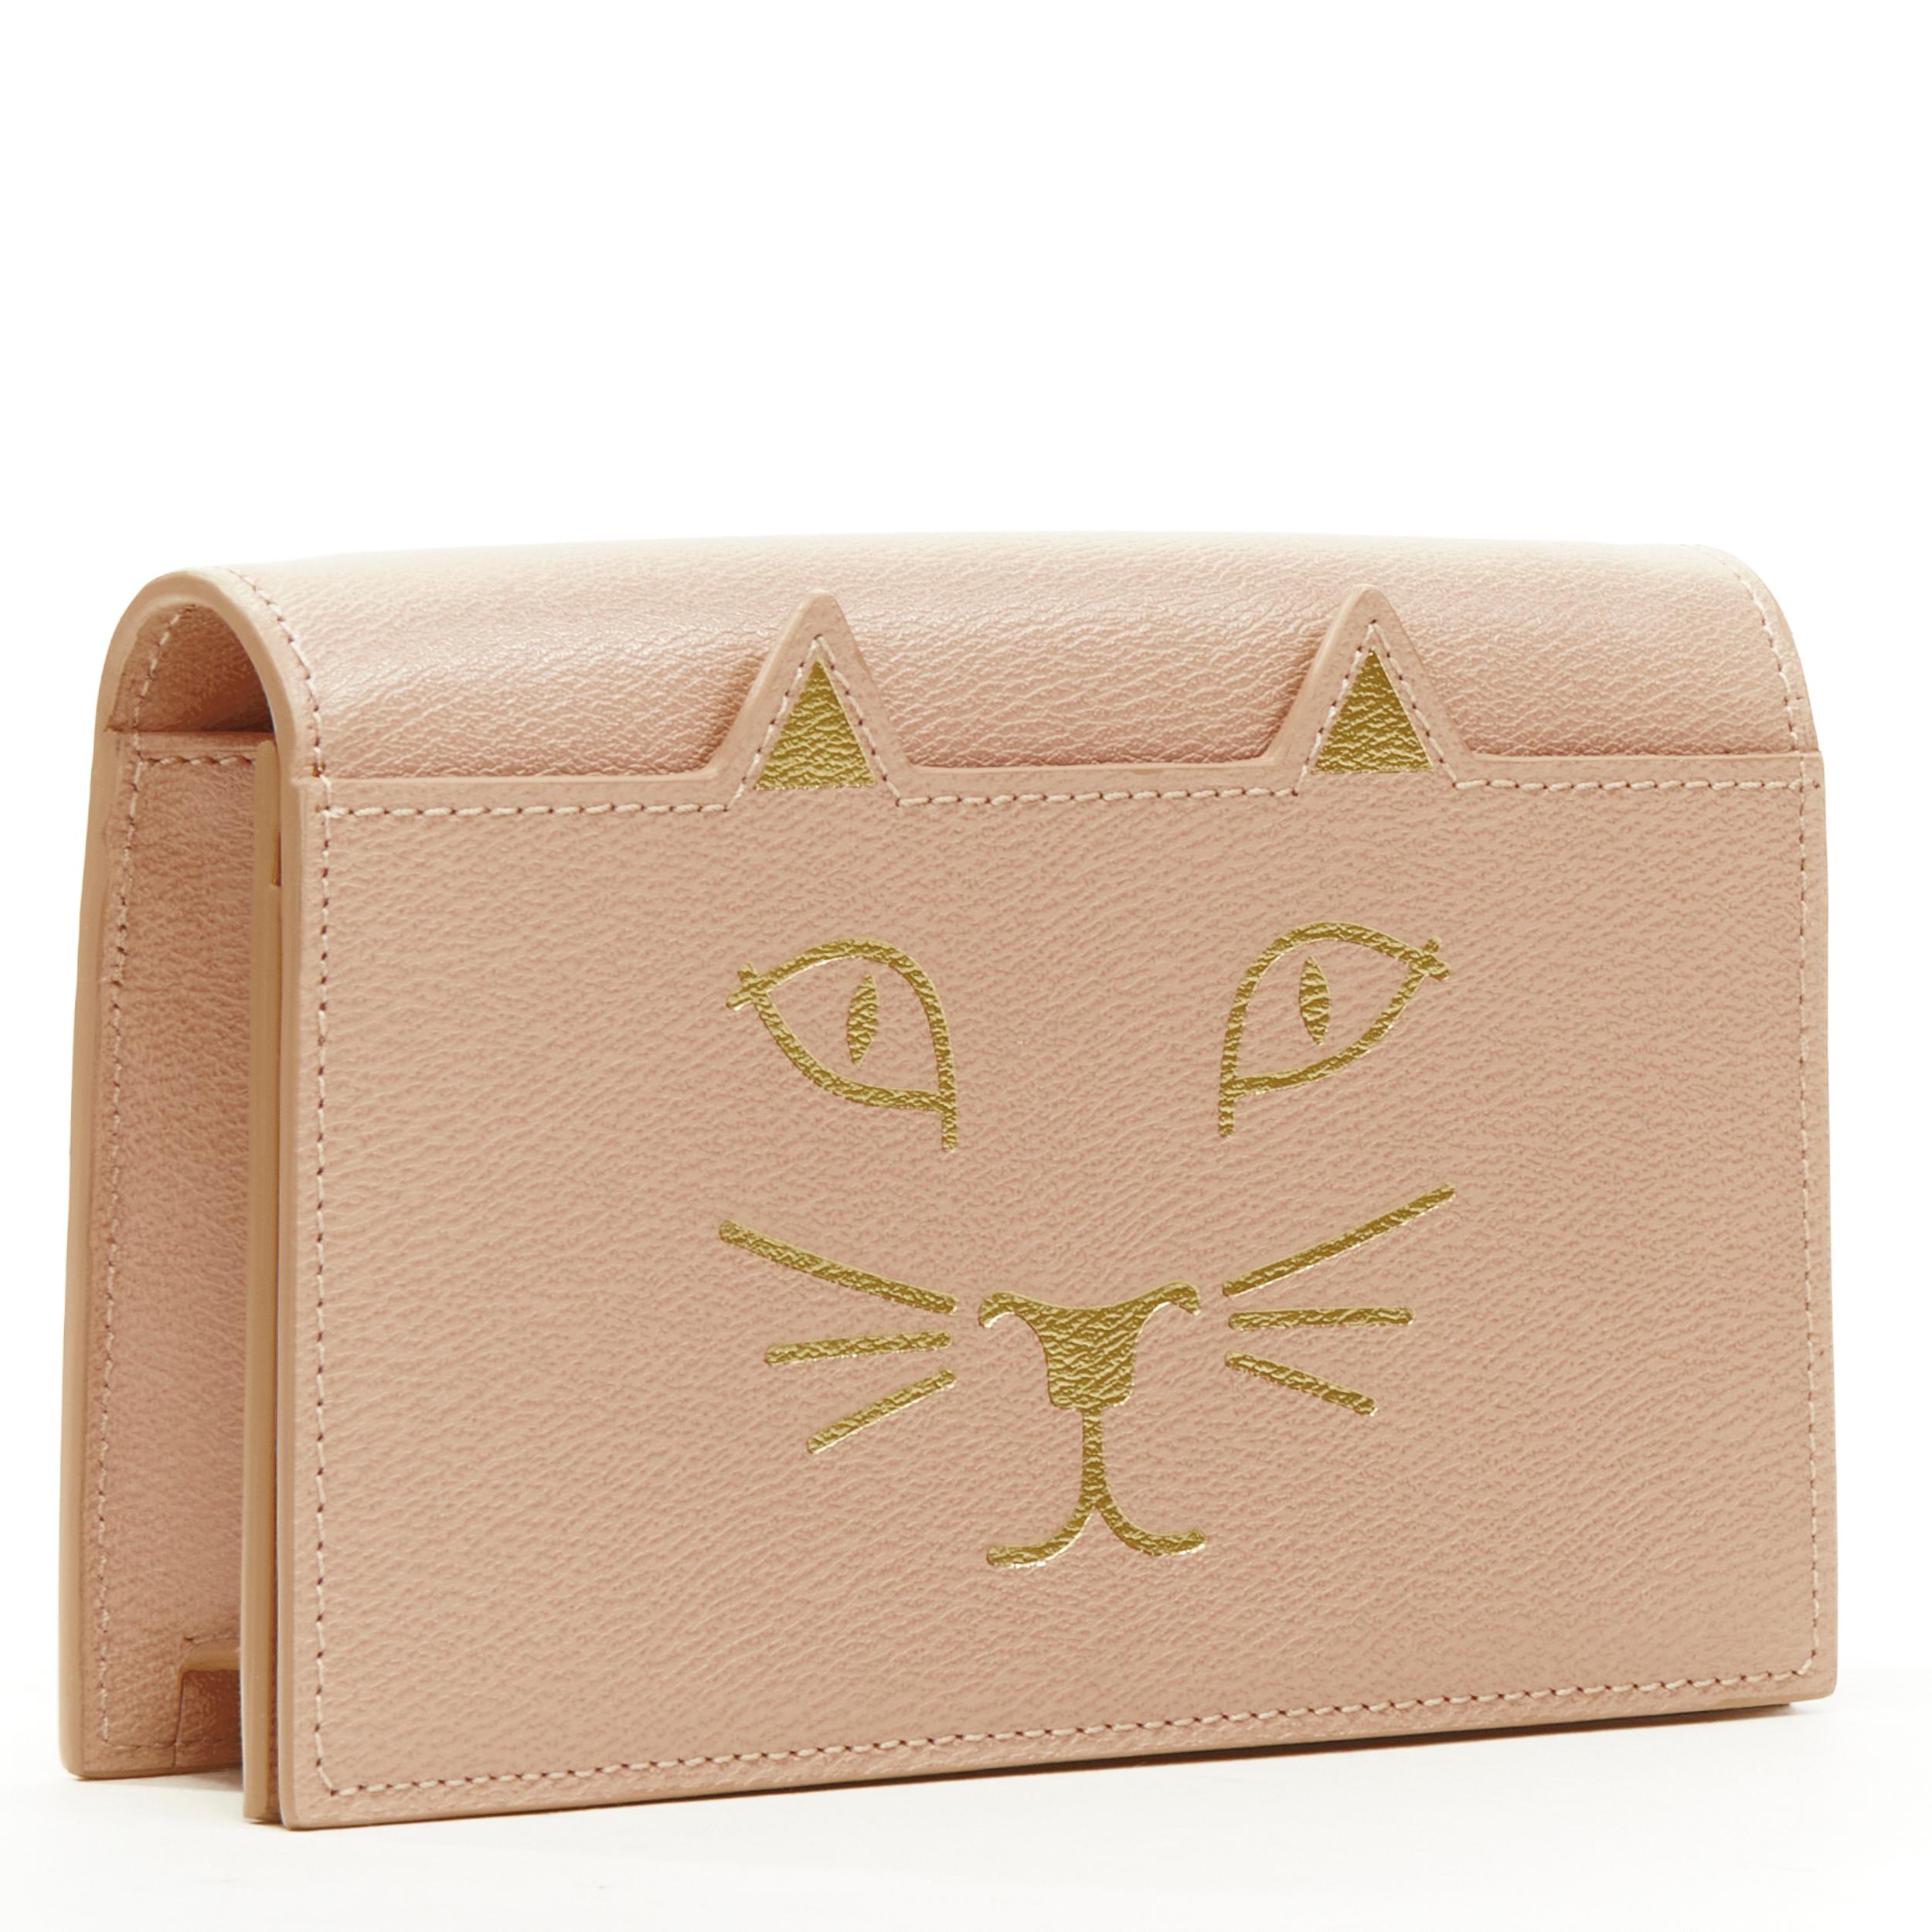 charlotte olympia kitty bag